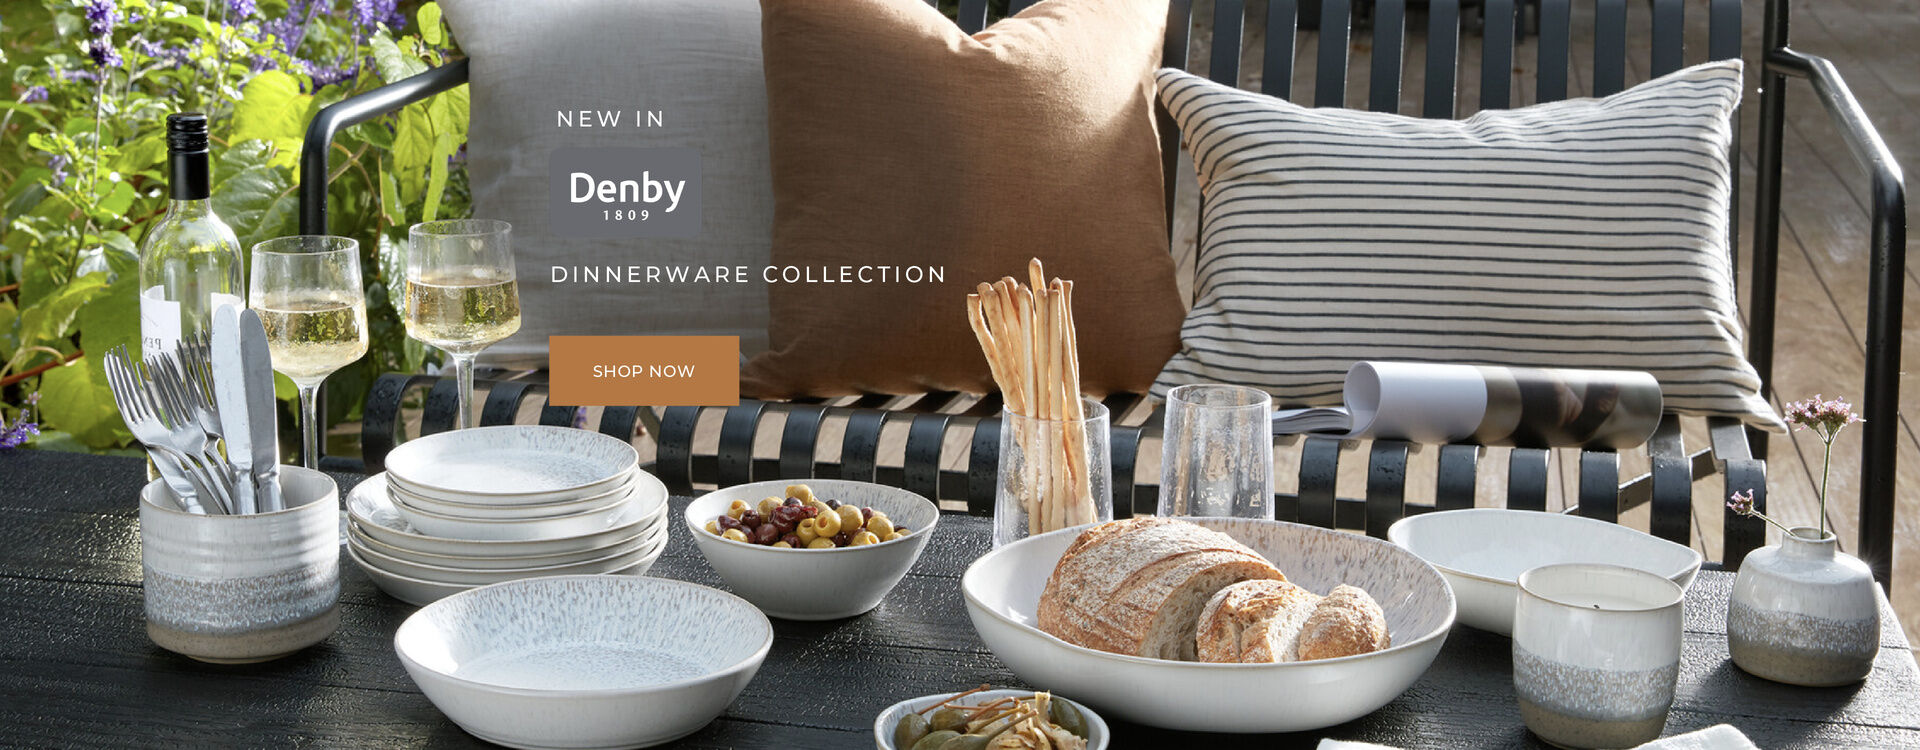 Denby Dinnerware